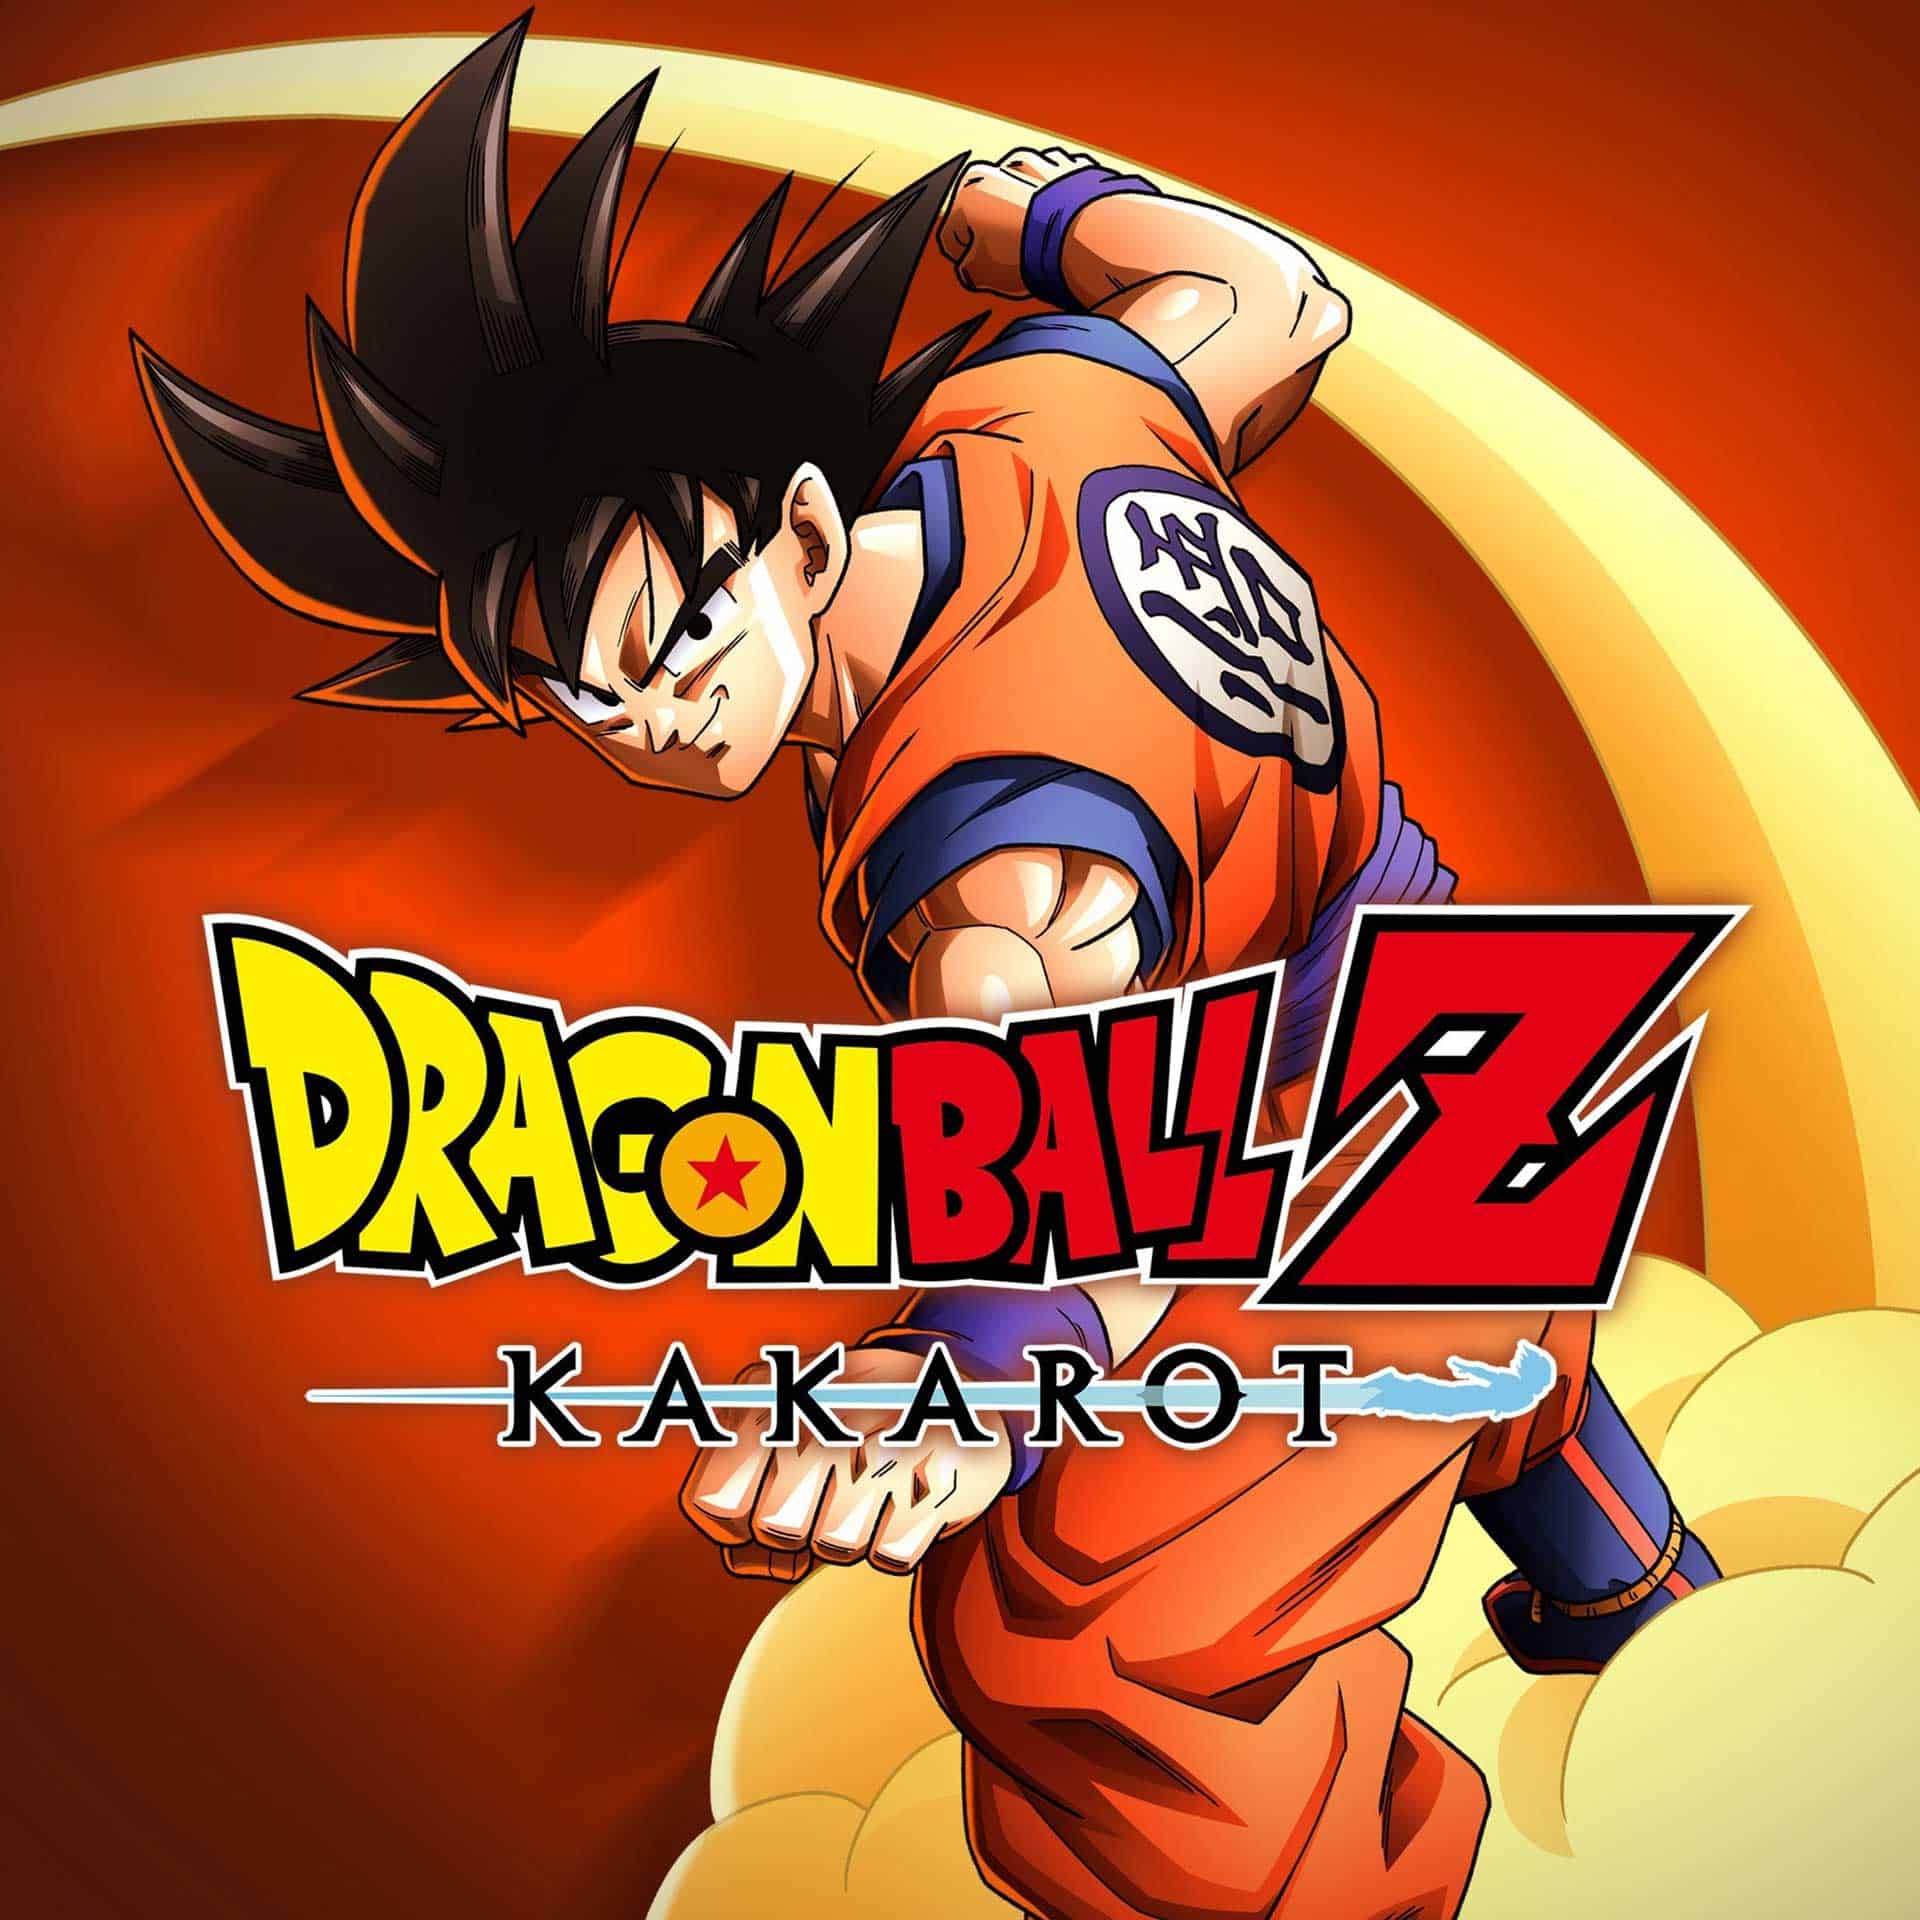 The Dragon Ball Z Kakarot Day One Update